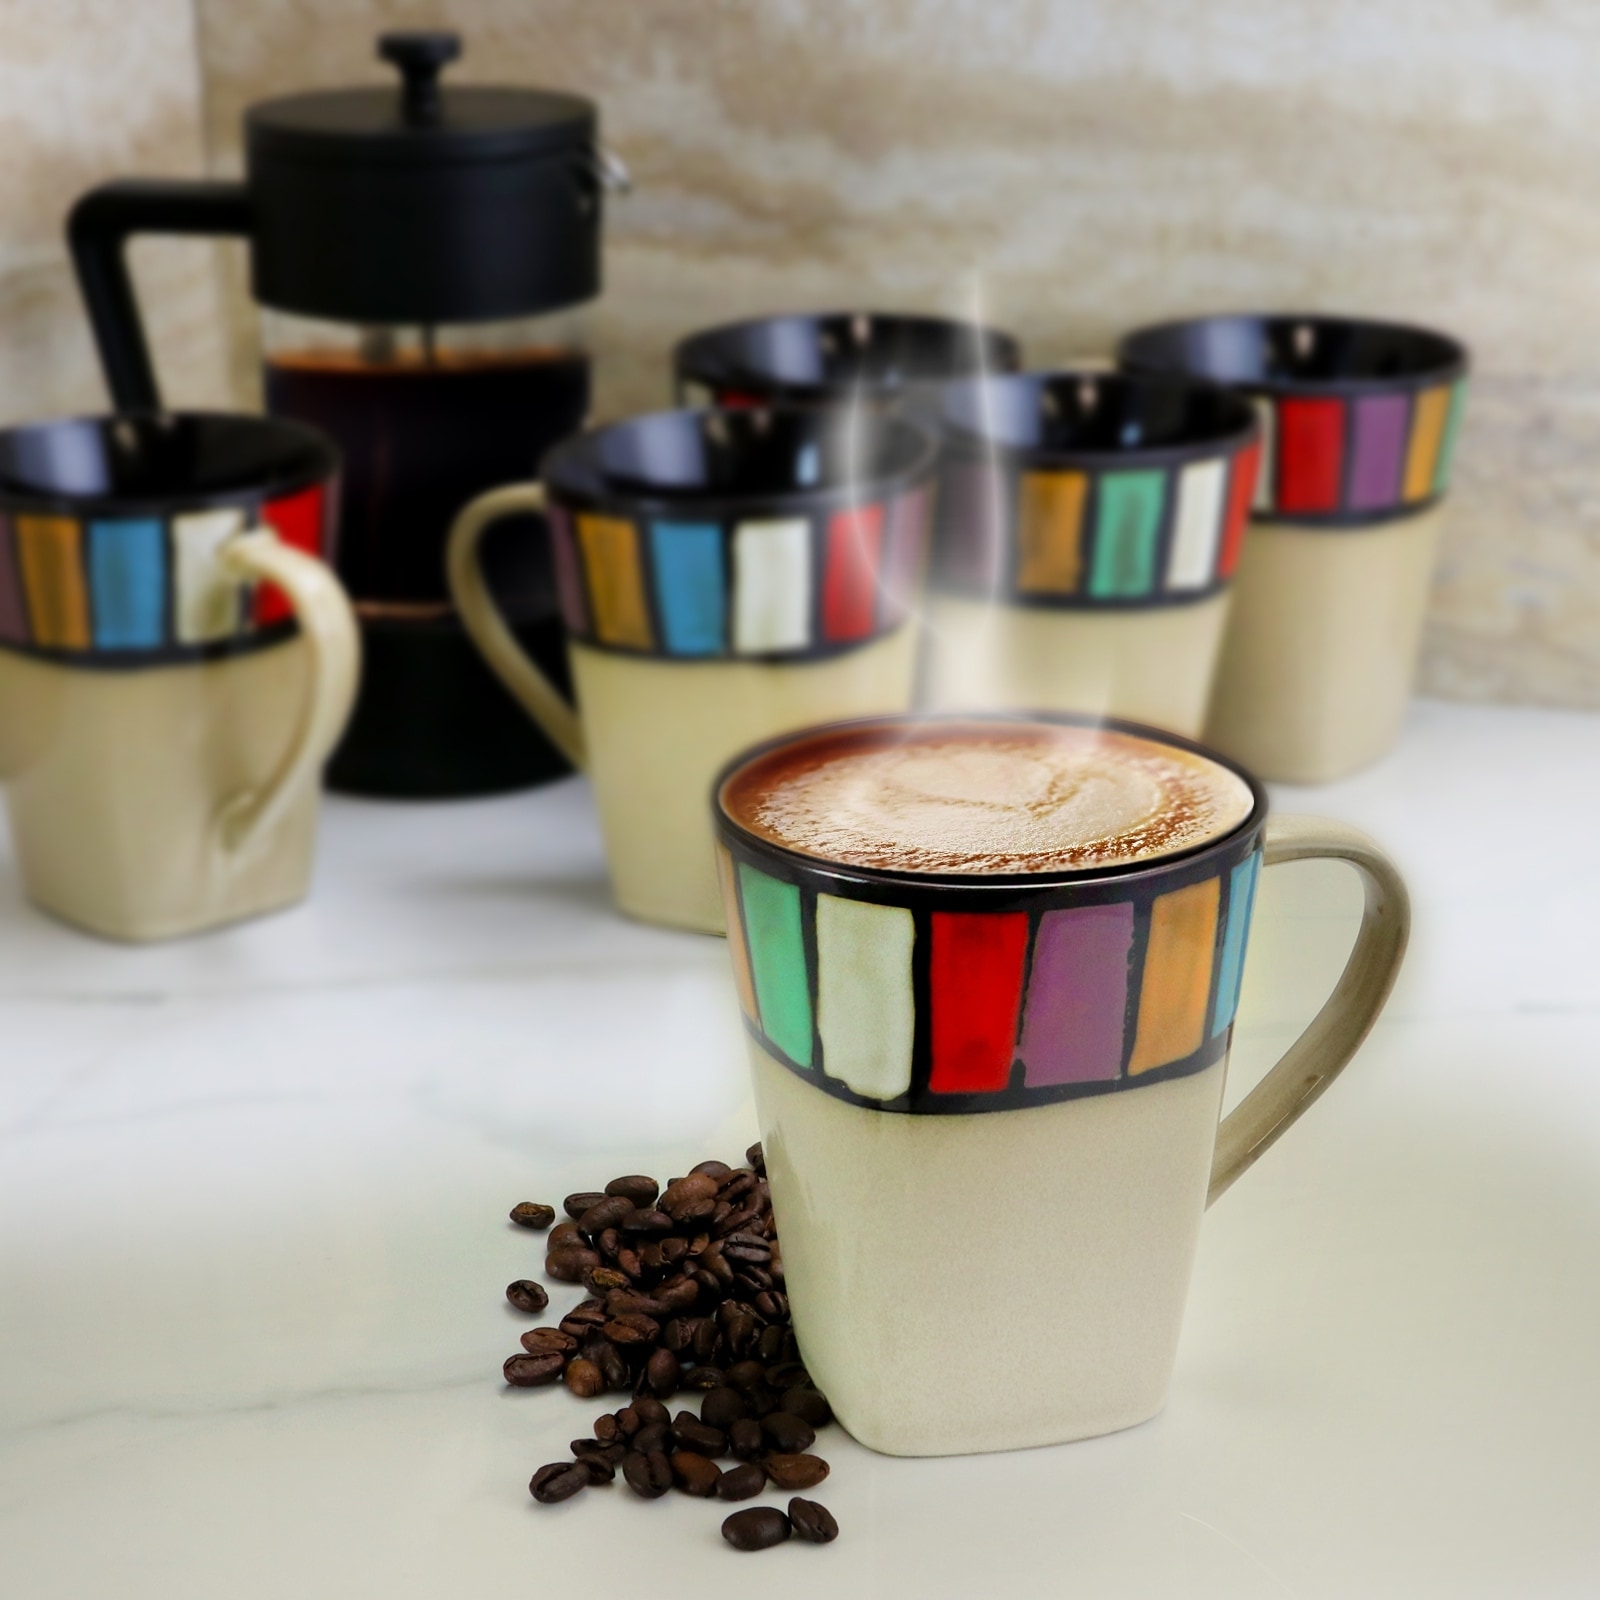 American Atelier Large Handle Coffee Mug, 14-ounce, Use For Coffee